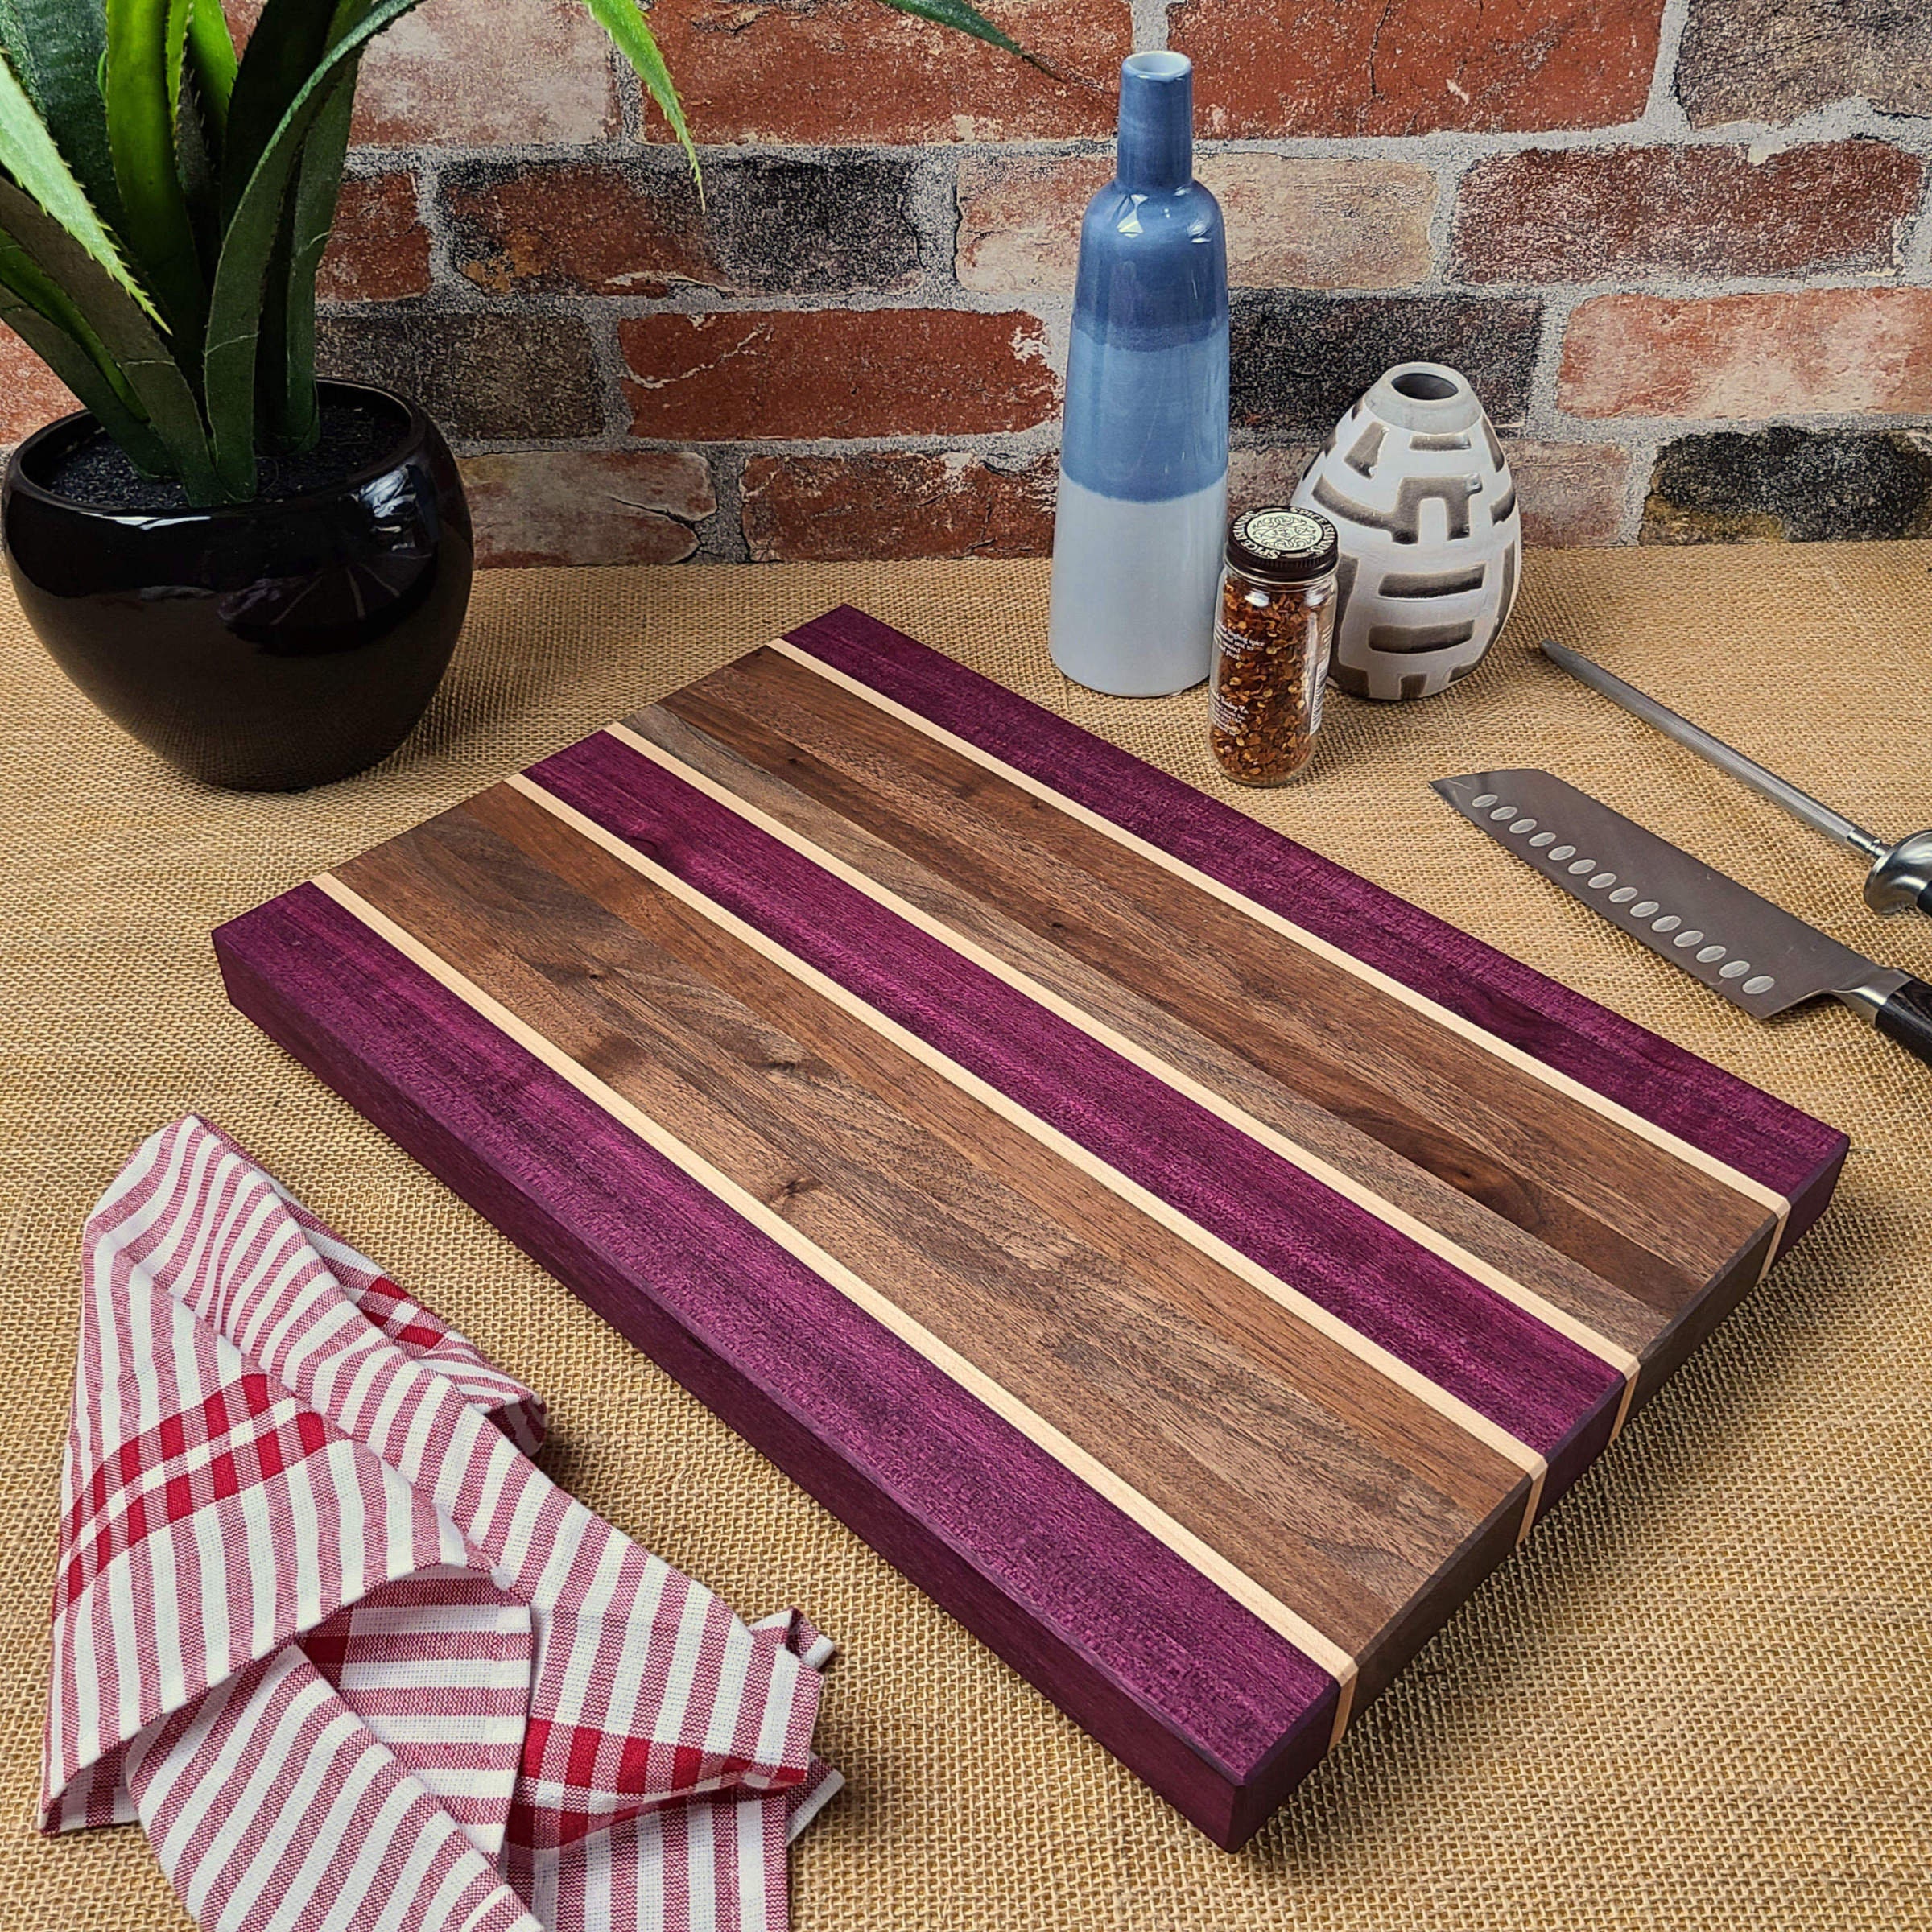 Exotic Cutting Board Kit - 1-1/2 x 9-7/8 x 16 - Brownheart, Maple,  Marblewood, Purpleheart & Wenge